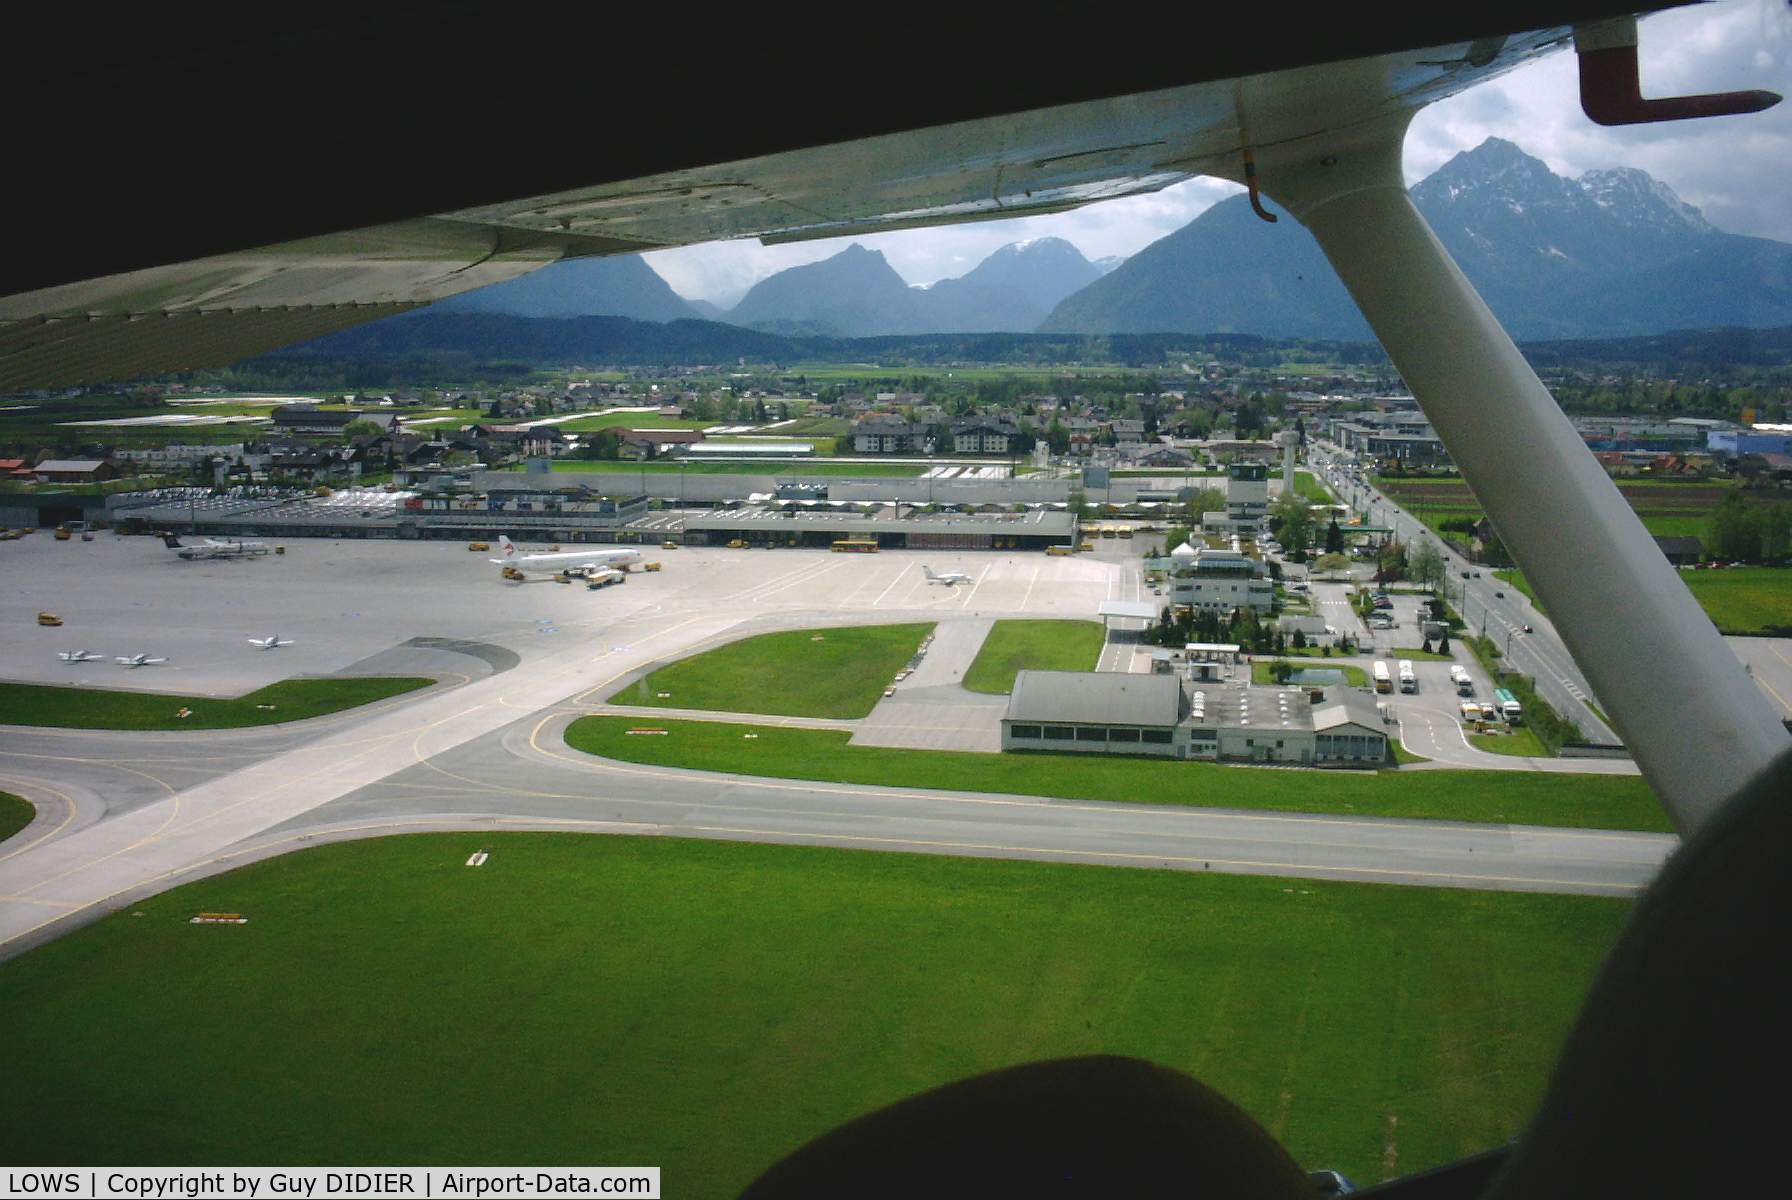 Salzburg Airport, Salzburg Austria (LOWS) - Take off at Salzburg May 01 2002 with Cessna 172 F-BXZM